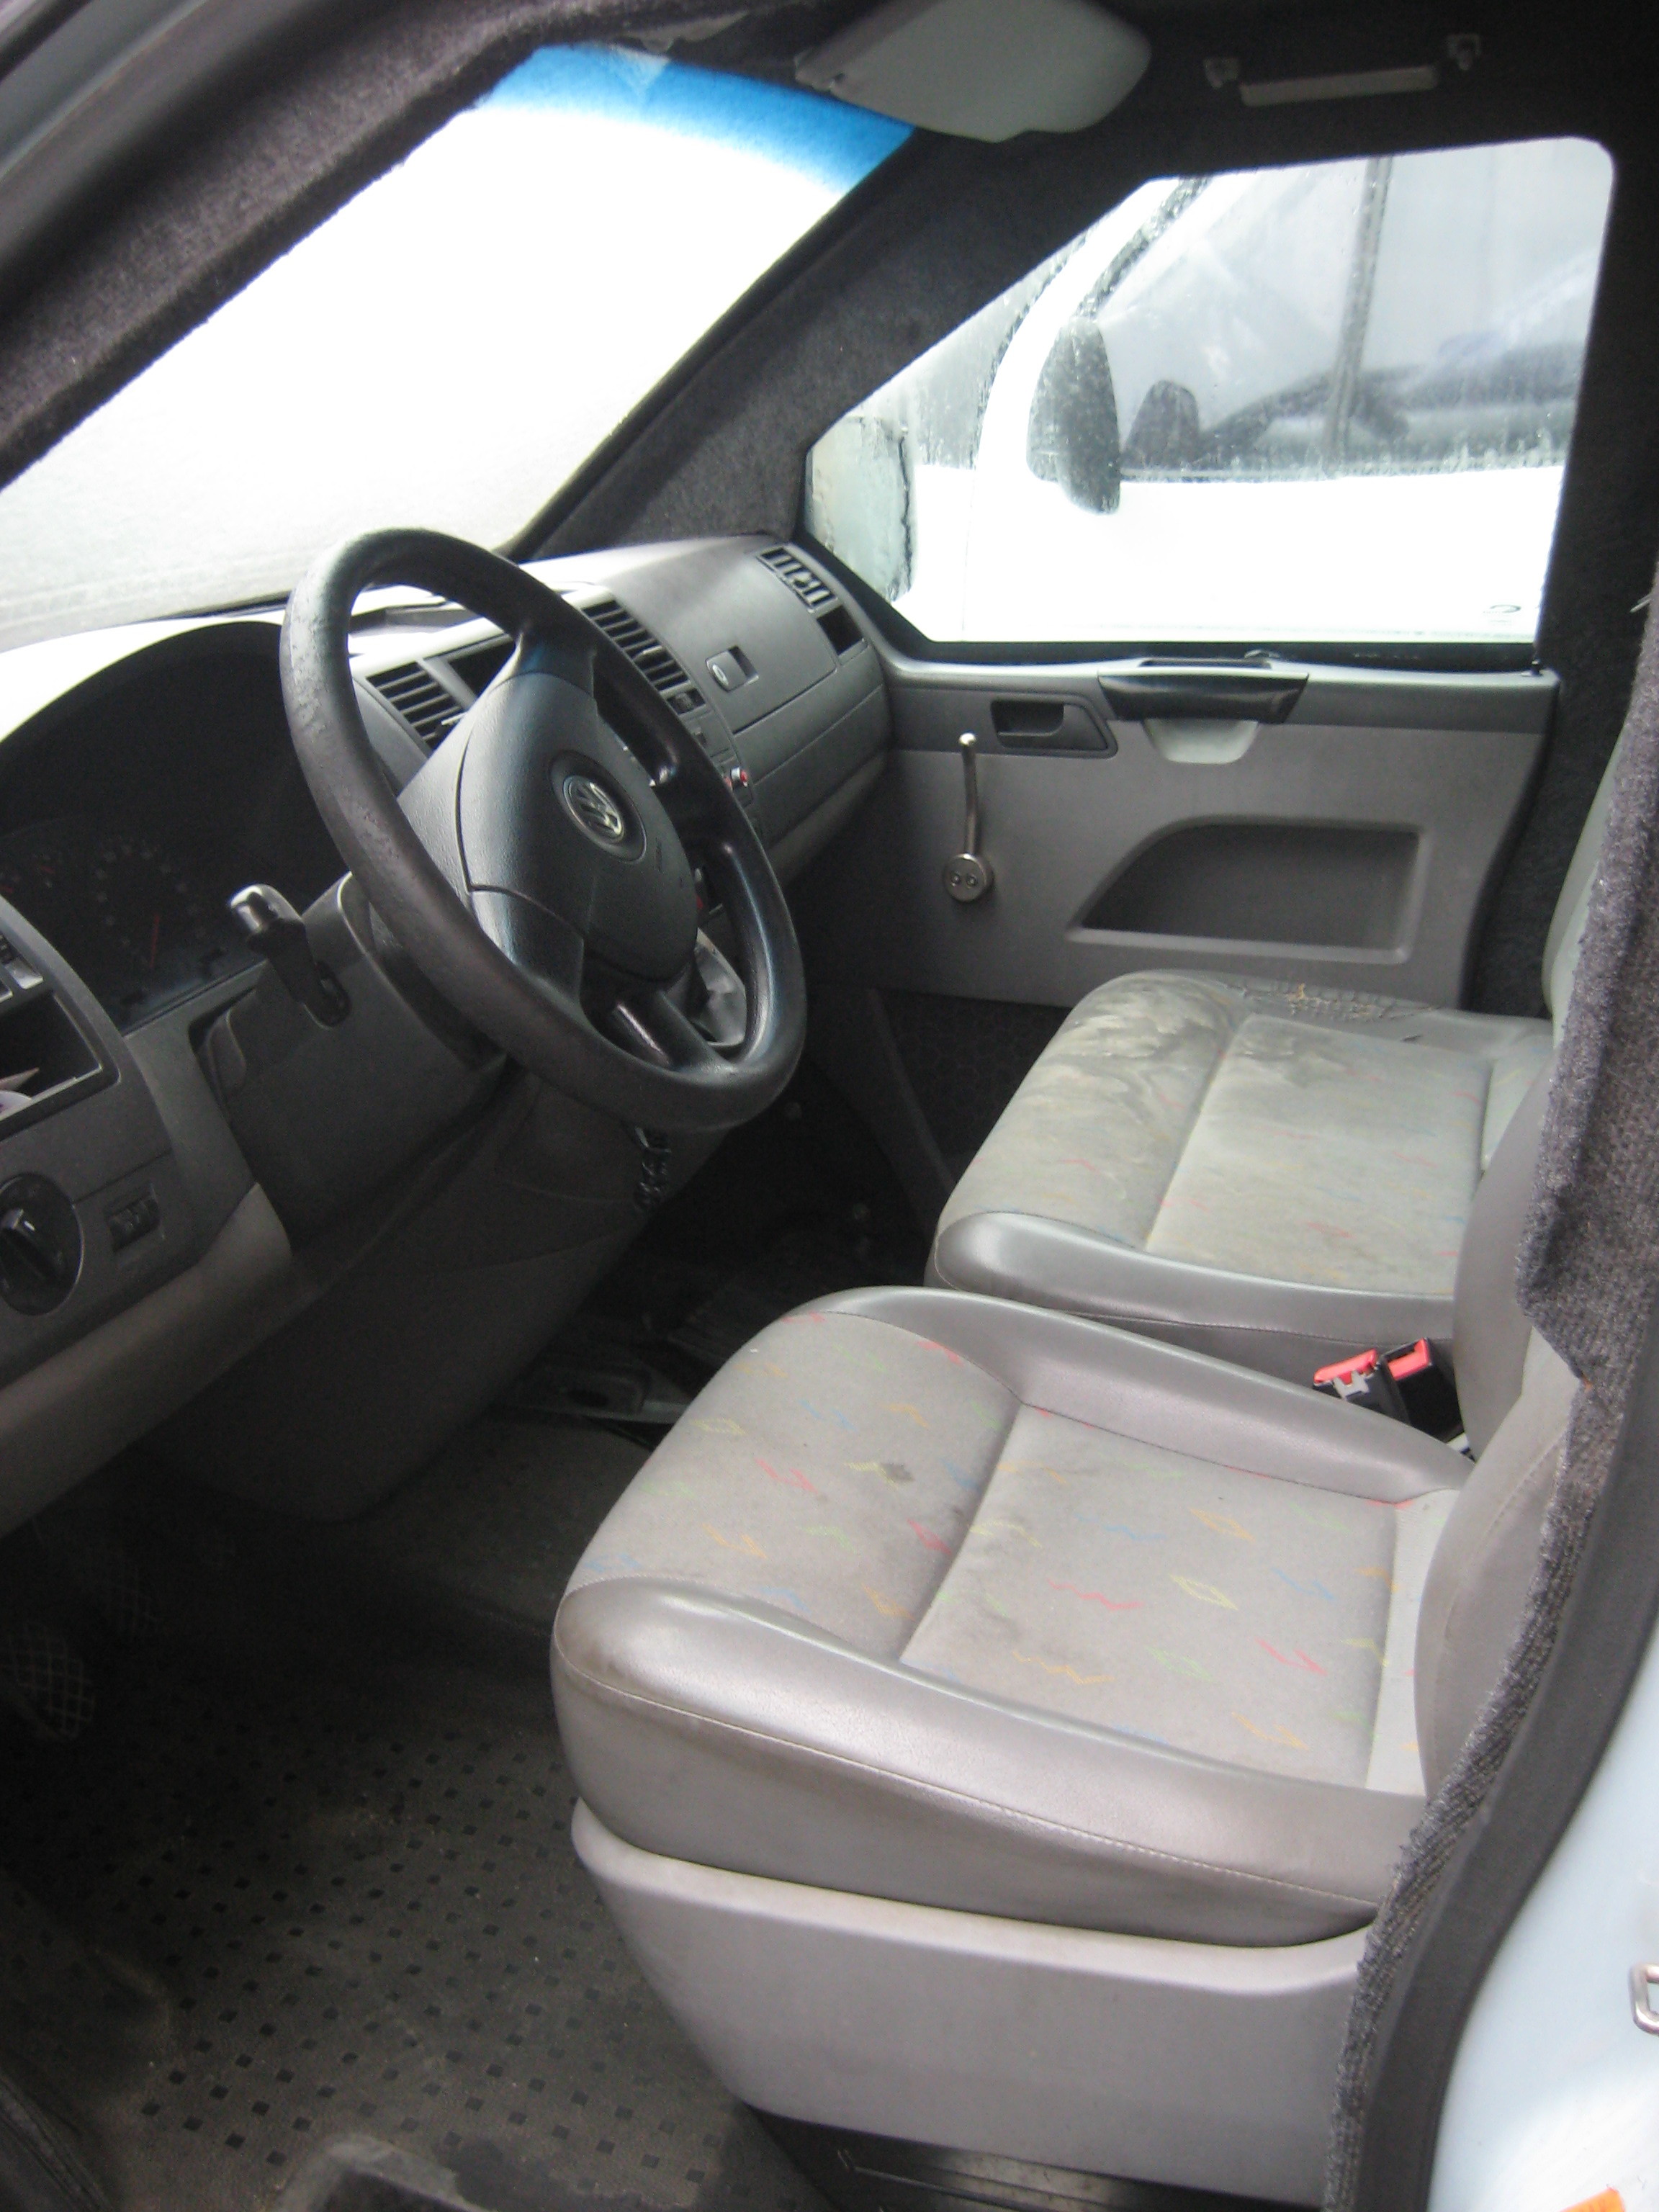 Фургон малотонажний VOLKSWAGEN TRANSPORTER, рік випуску – 2008, номер шасі, кузова WV1ZZZ7HZ8H161924, номер державної реєстрації АЕ0123СМ